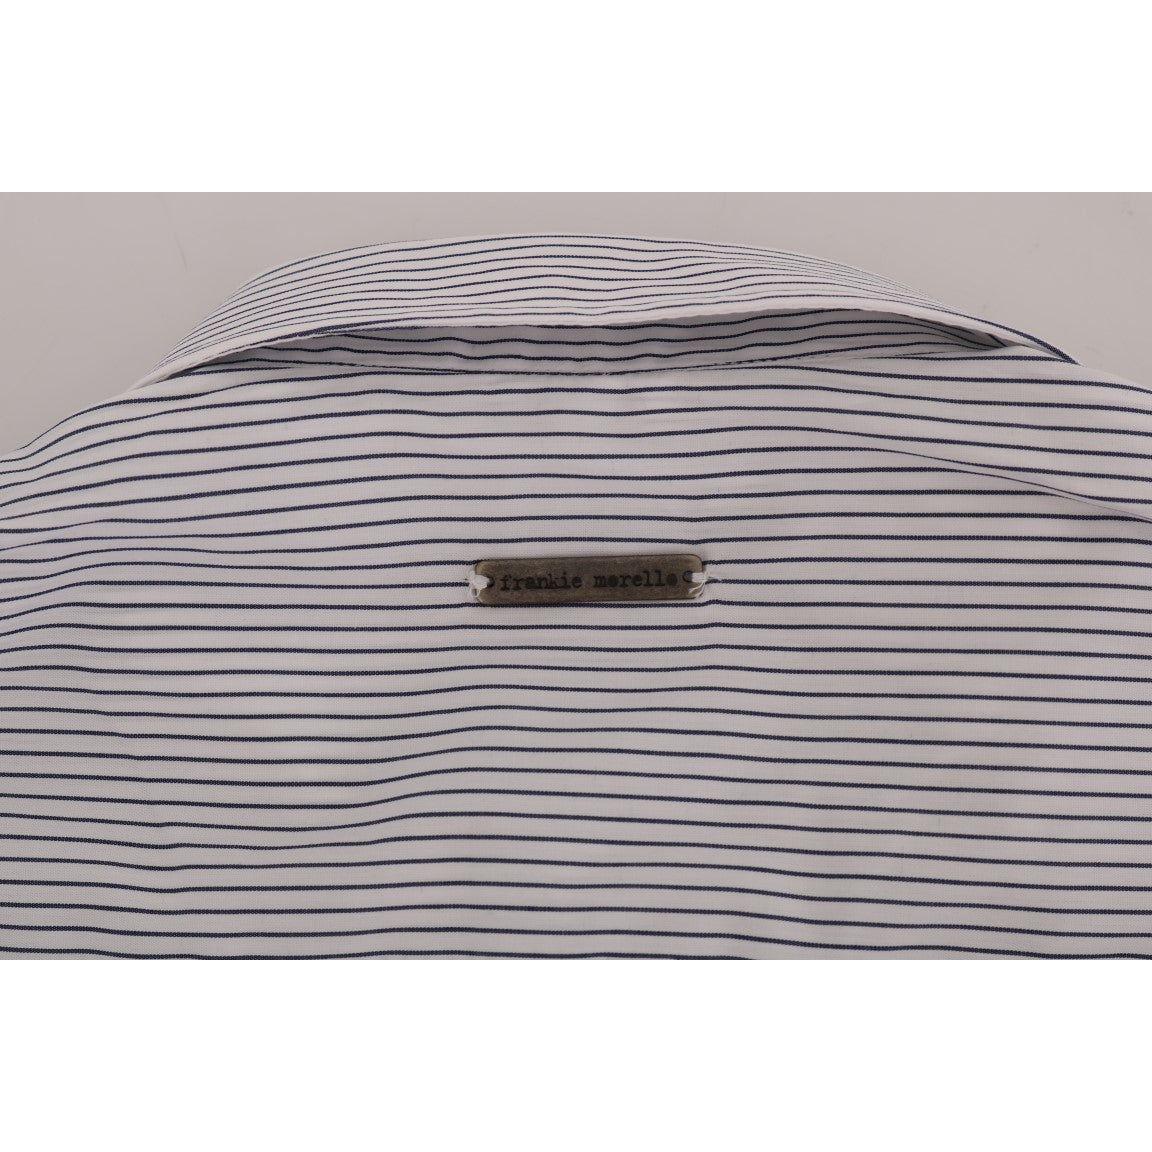 Frankie Morello Elegant White & Blue Striped Casual Shirt white-blue-striped-casual-cotton-regular-fit-shirt 457870-white-blue-striped-casual-cotton-regular-fit-shirt-7.jpg